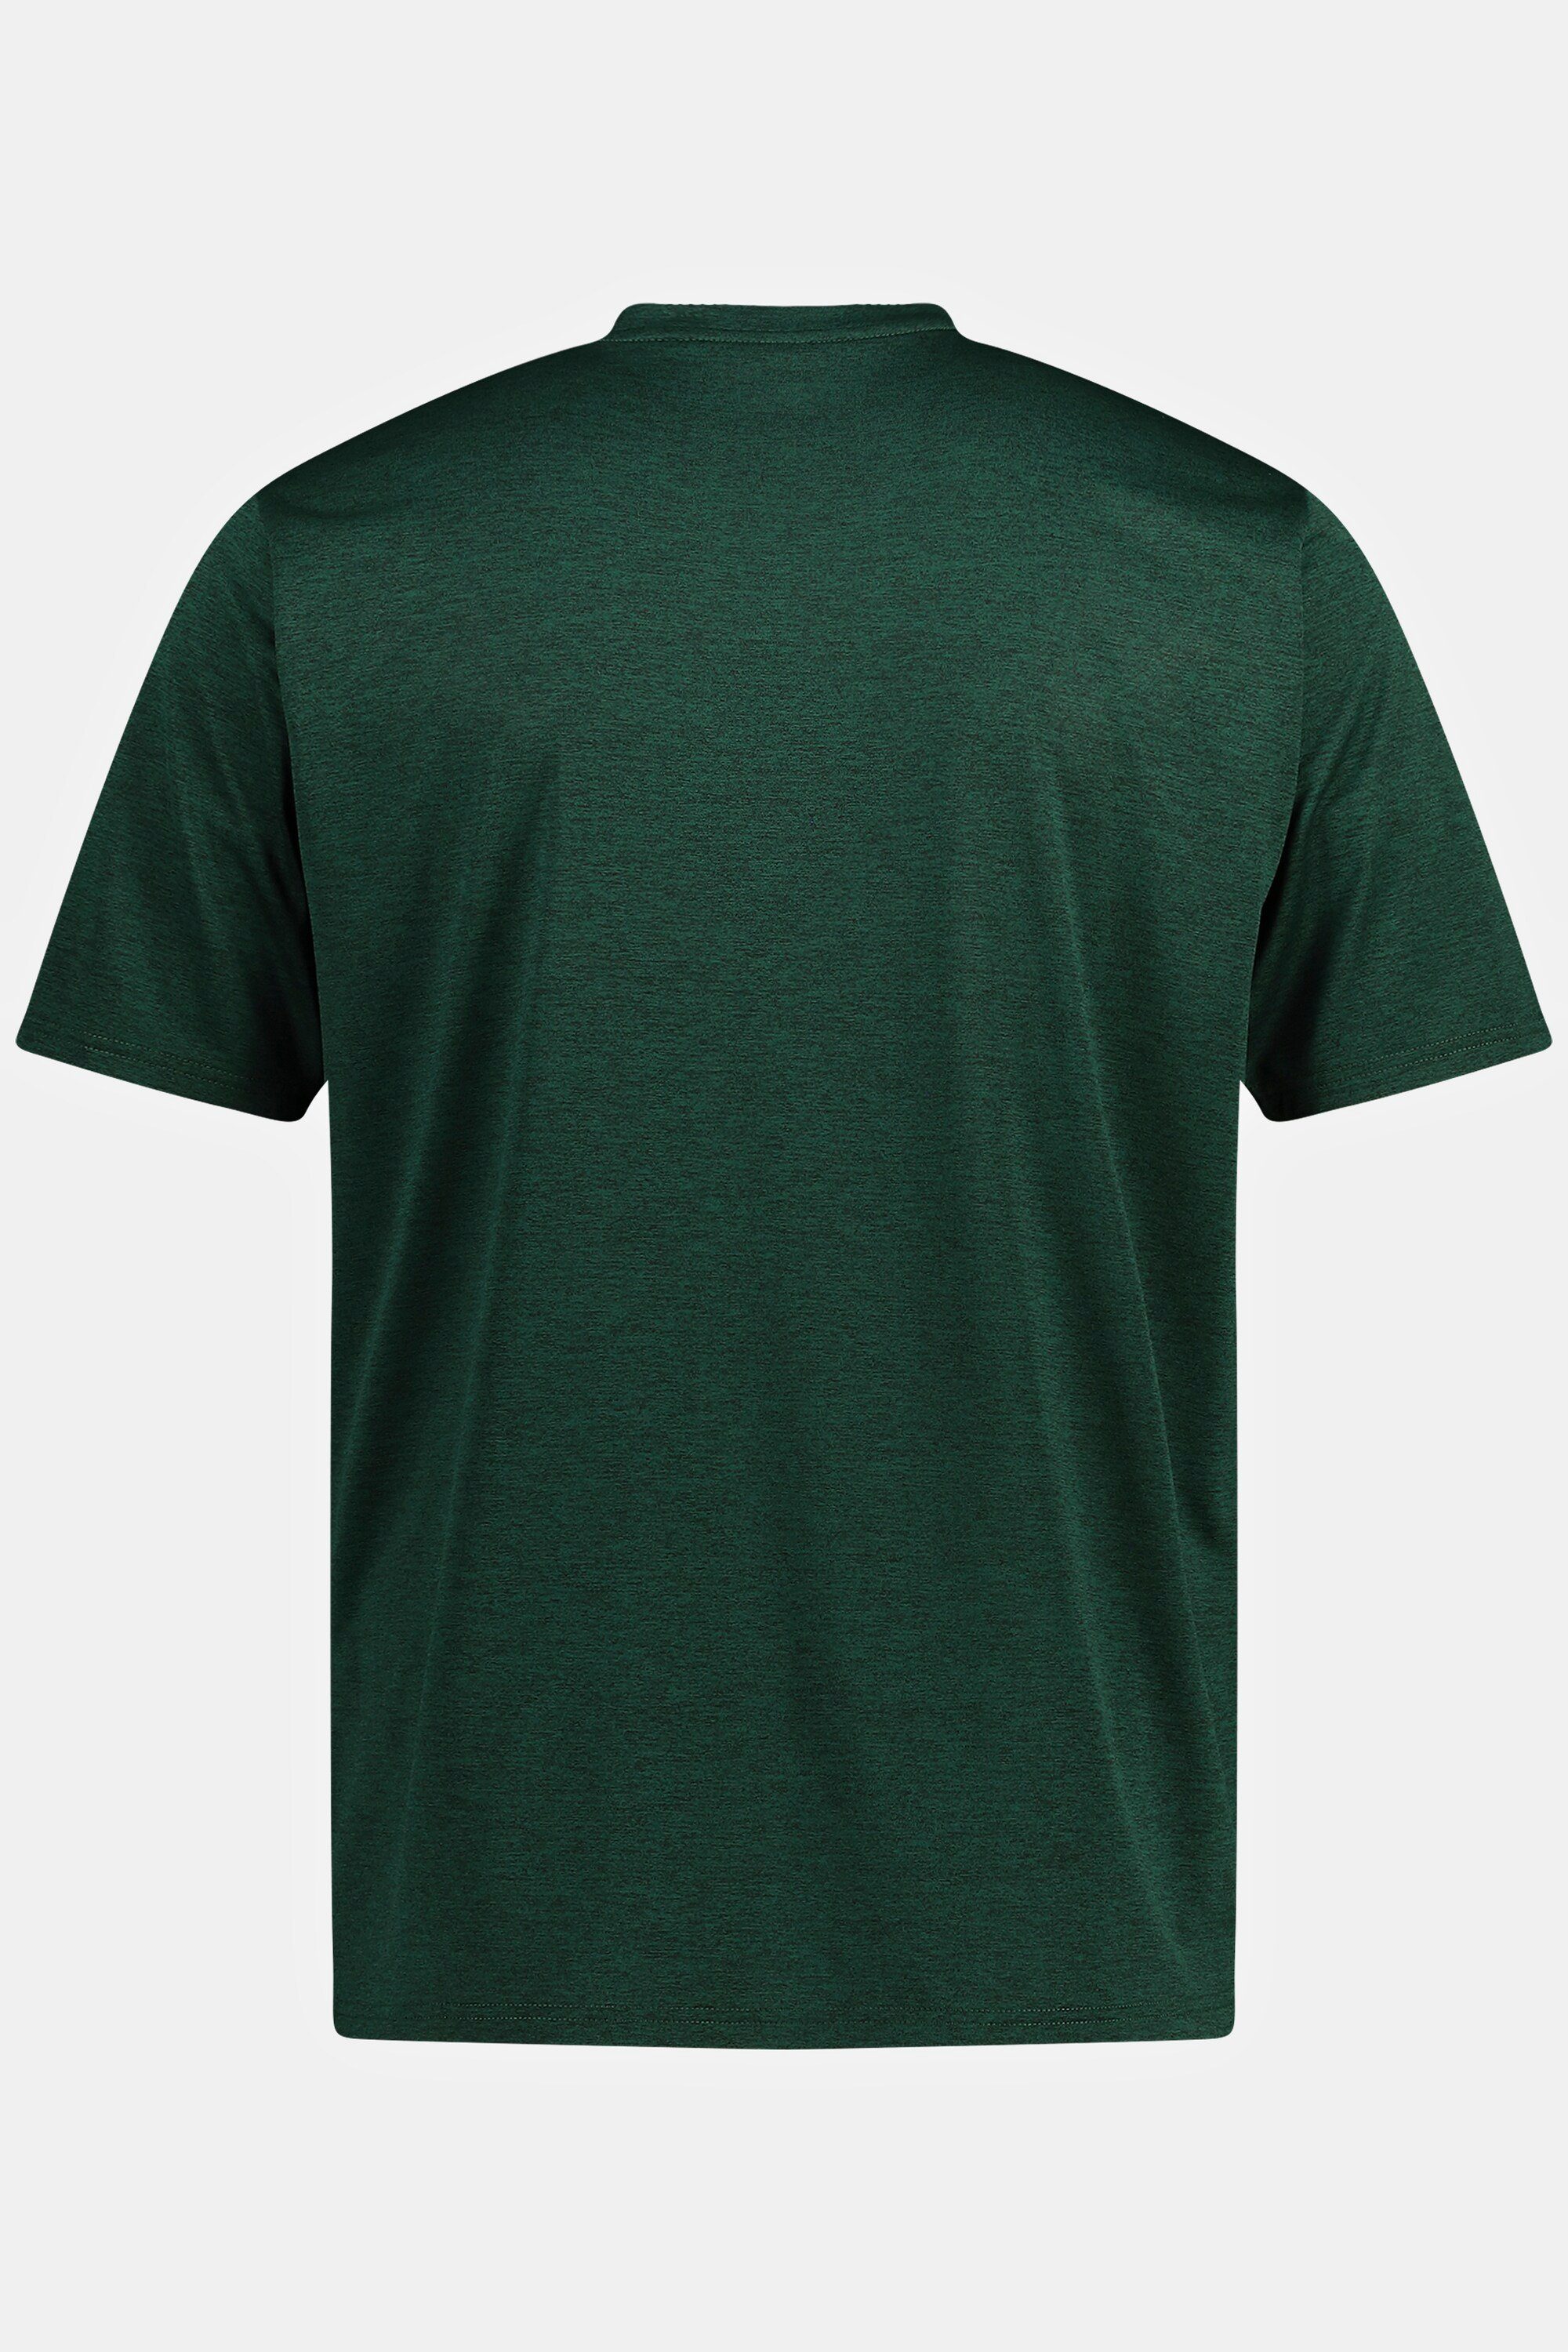 Halbarm T-Shirt QuickDry Funktions-Shirt FLEXNAMIC® JP1880 flaschengrün